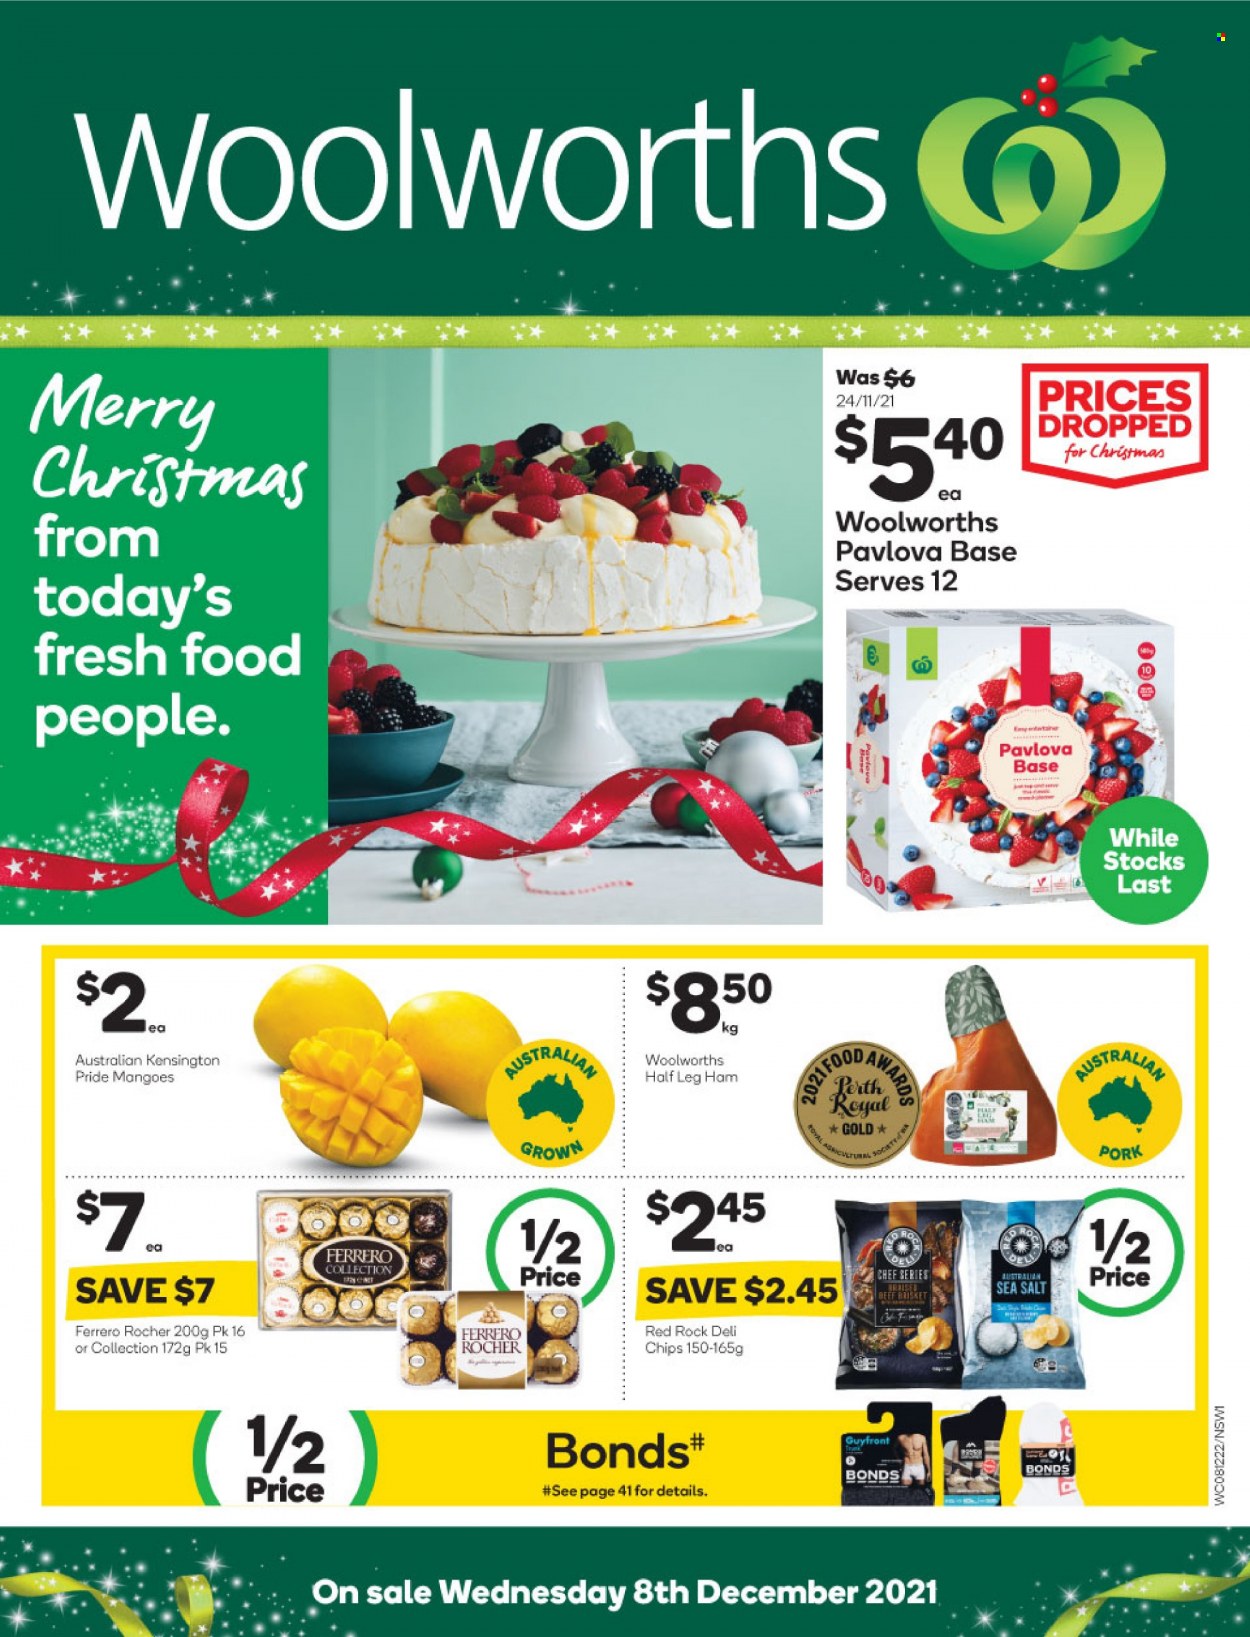 thumbnail - Woolworths Catalogue - 8 Dec 2021 - 14 Dec 2021 - Sales products - mango, ham, leg ham, Ferrero Rocher, chips, Bonds. Page 1.